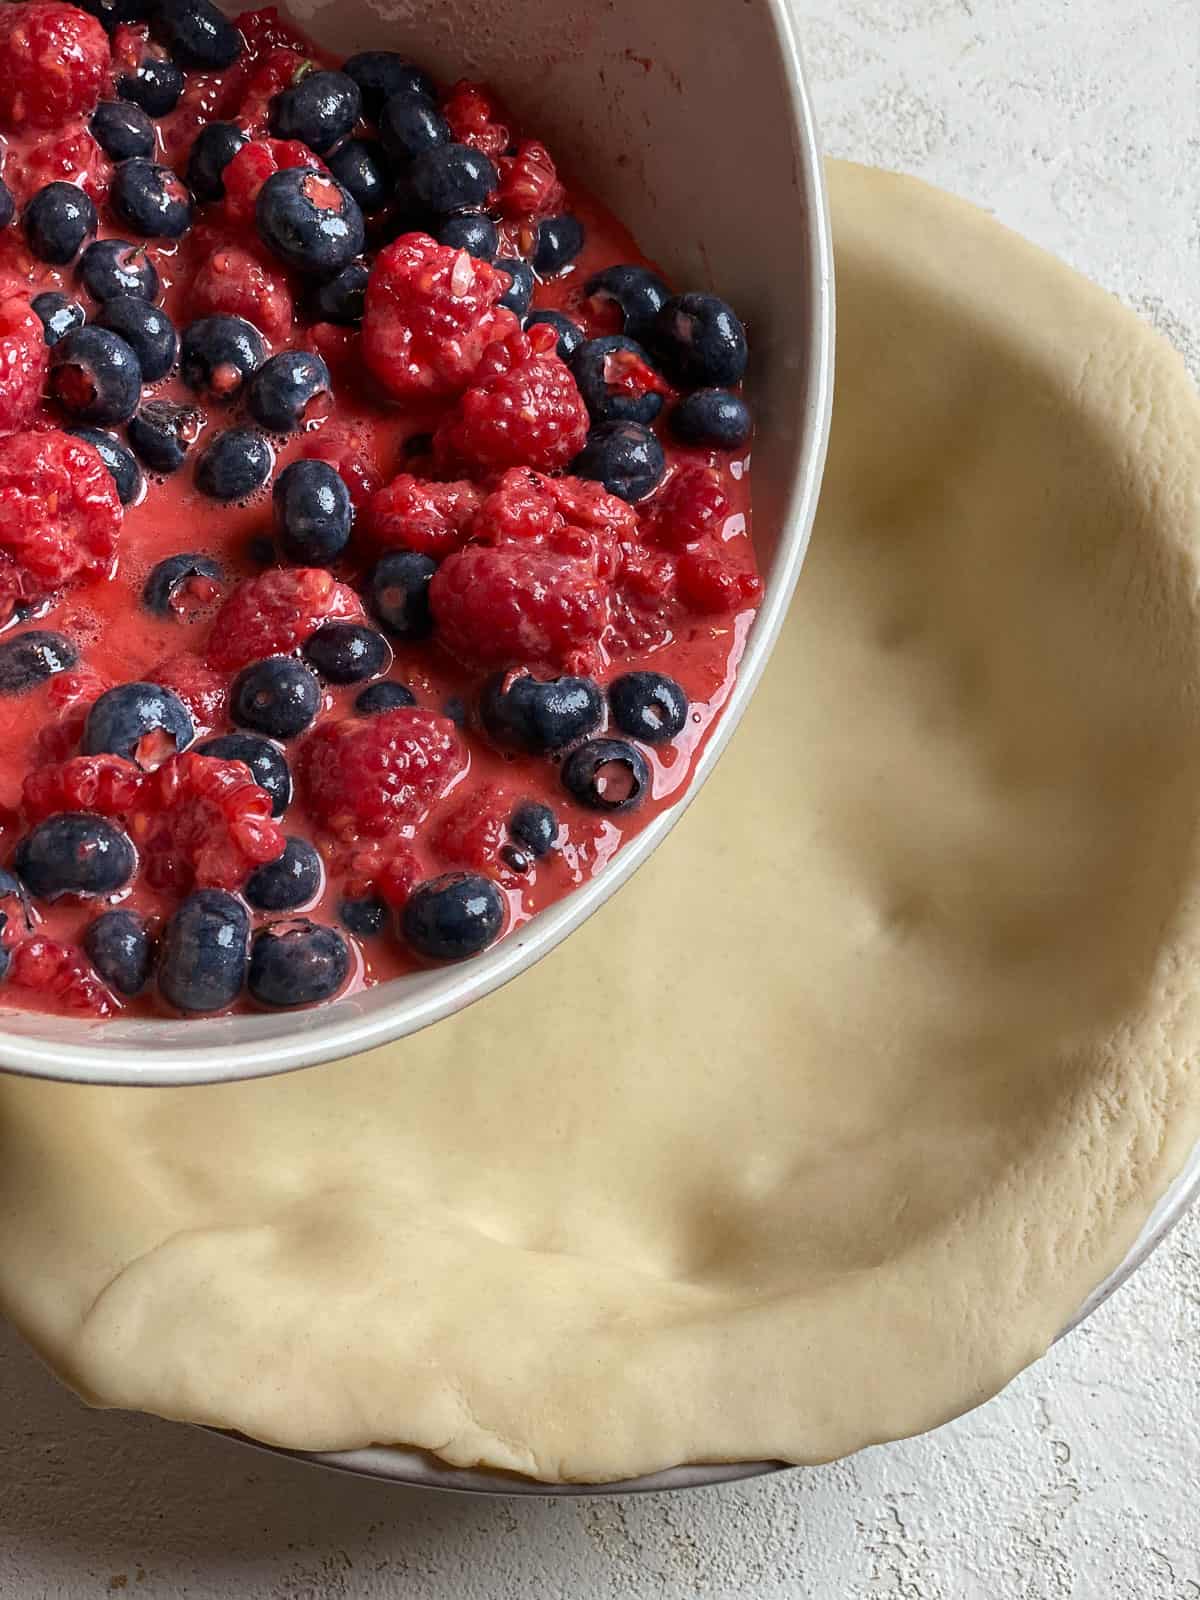 process of adding berry ingredient mixture to pie crust